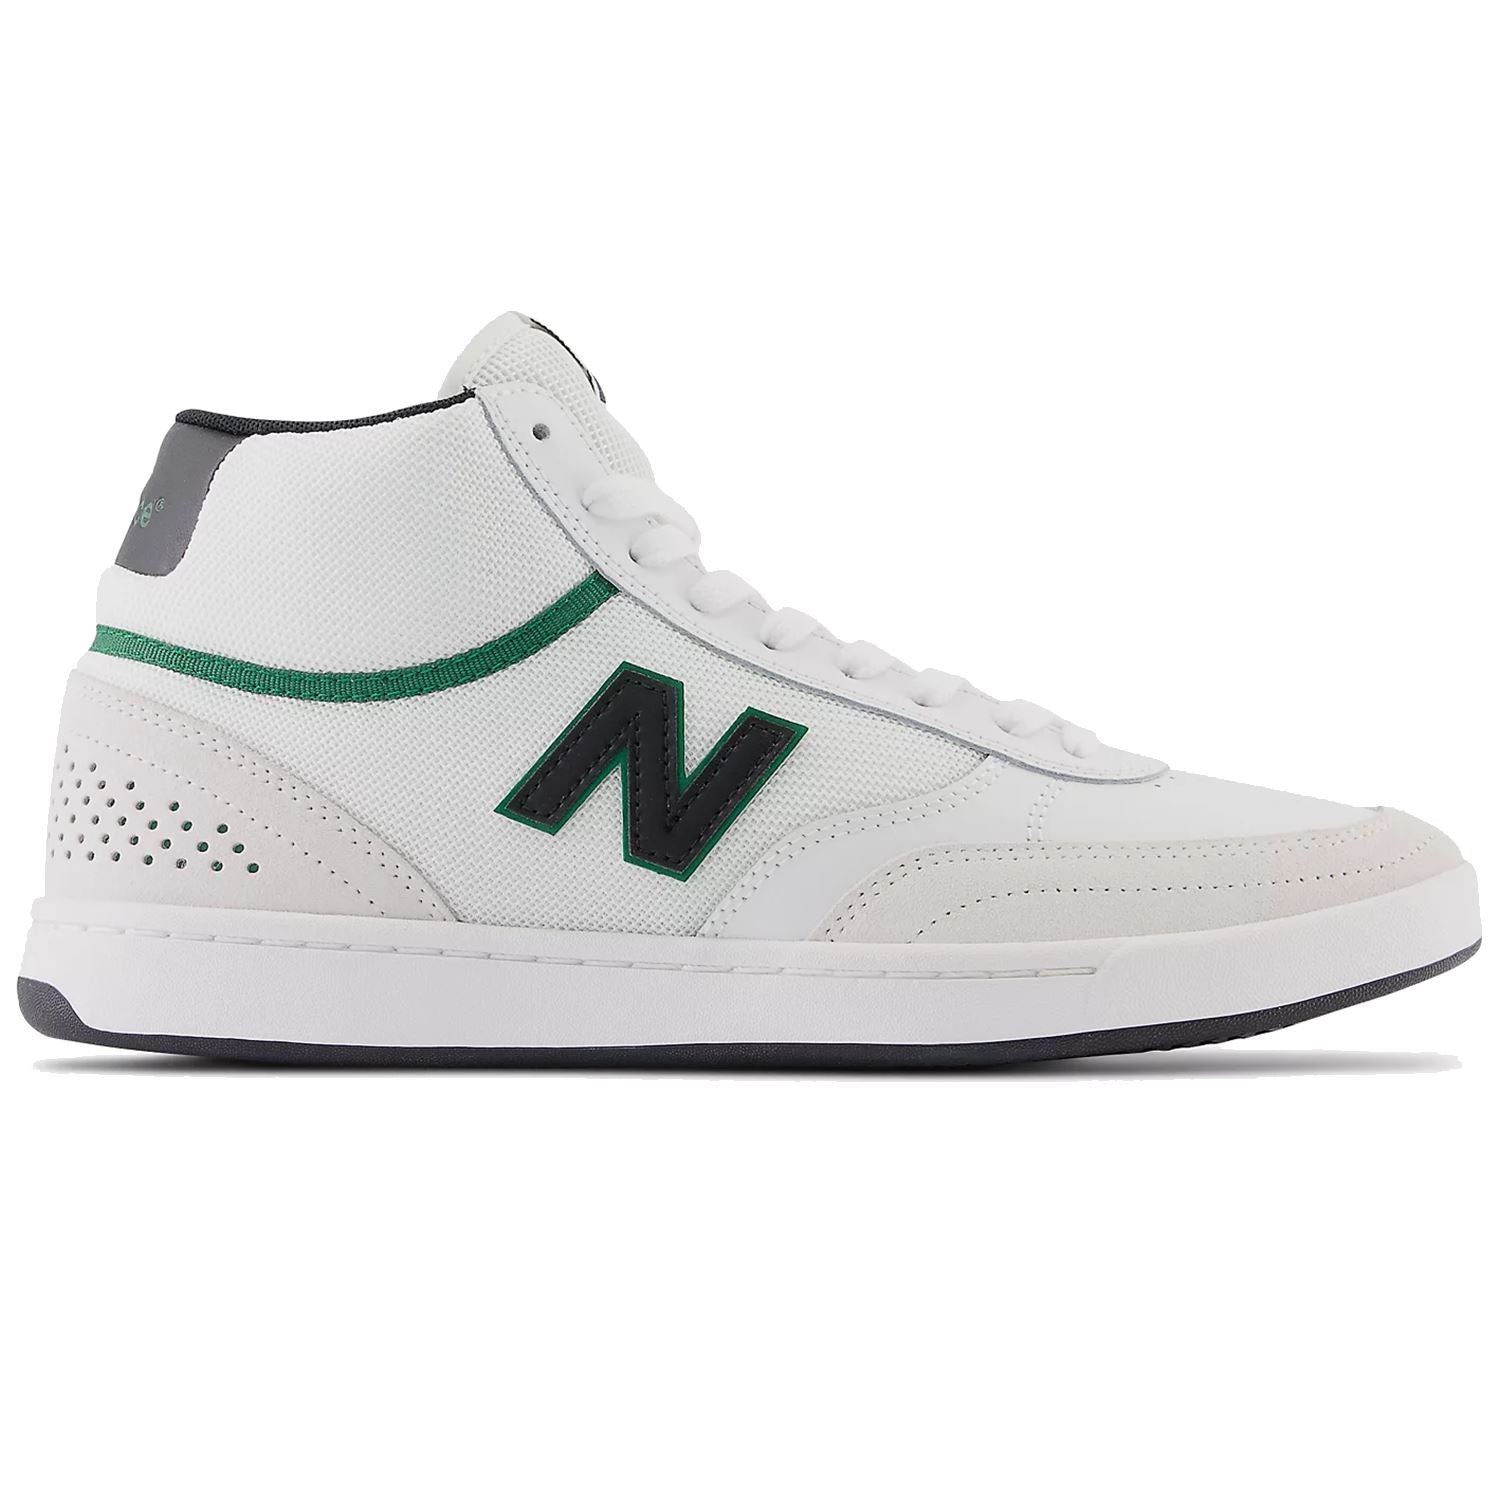 New Balance Numeric NM440 High White/Black/Green footwear New Balance Numeric 